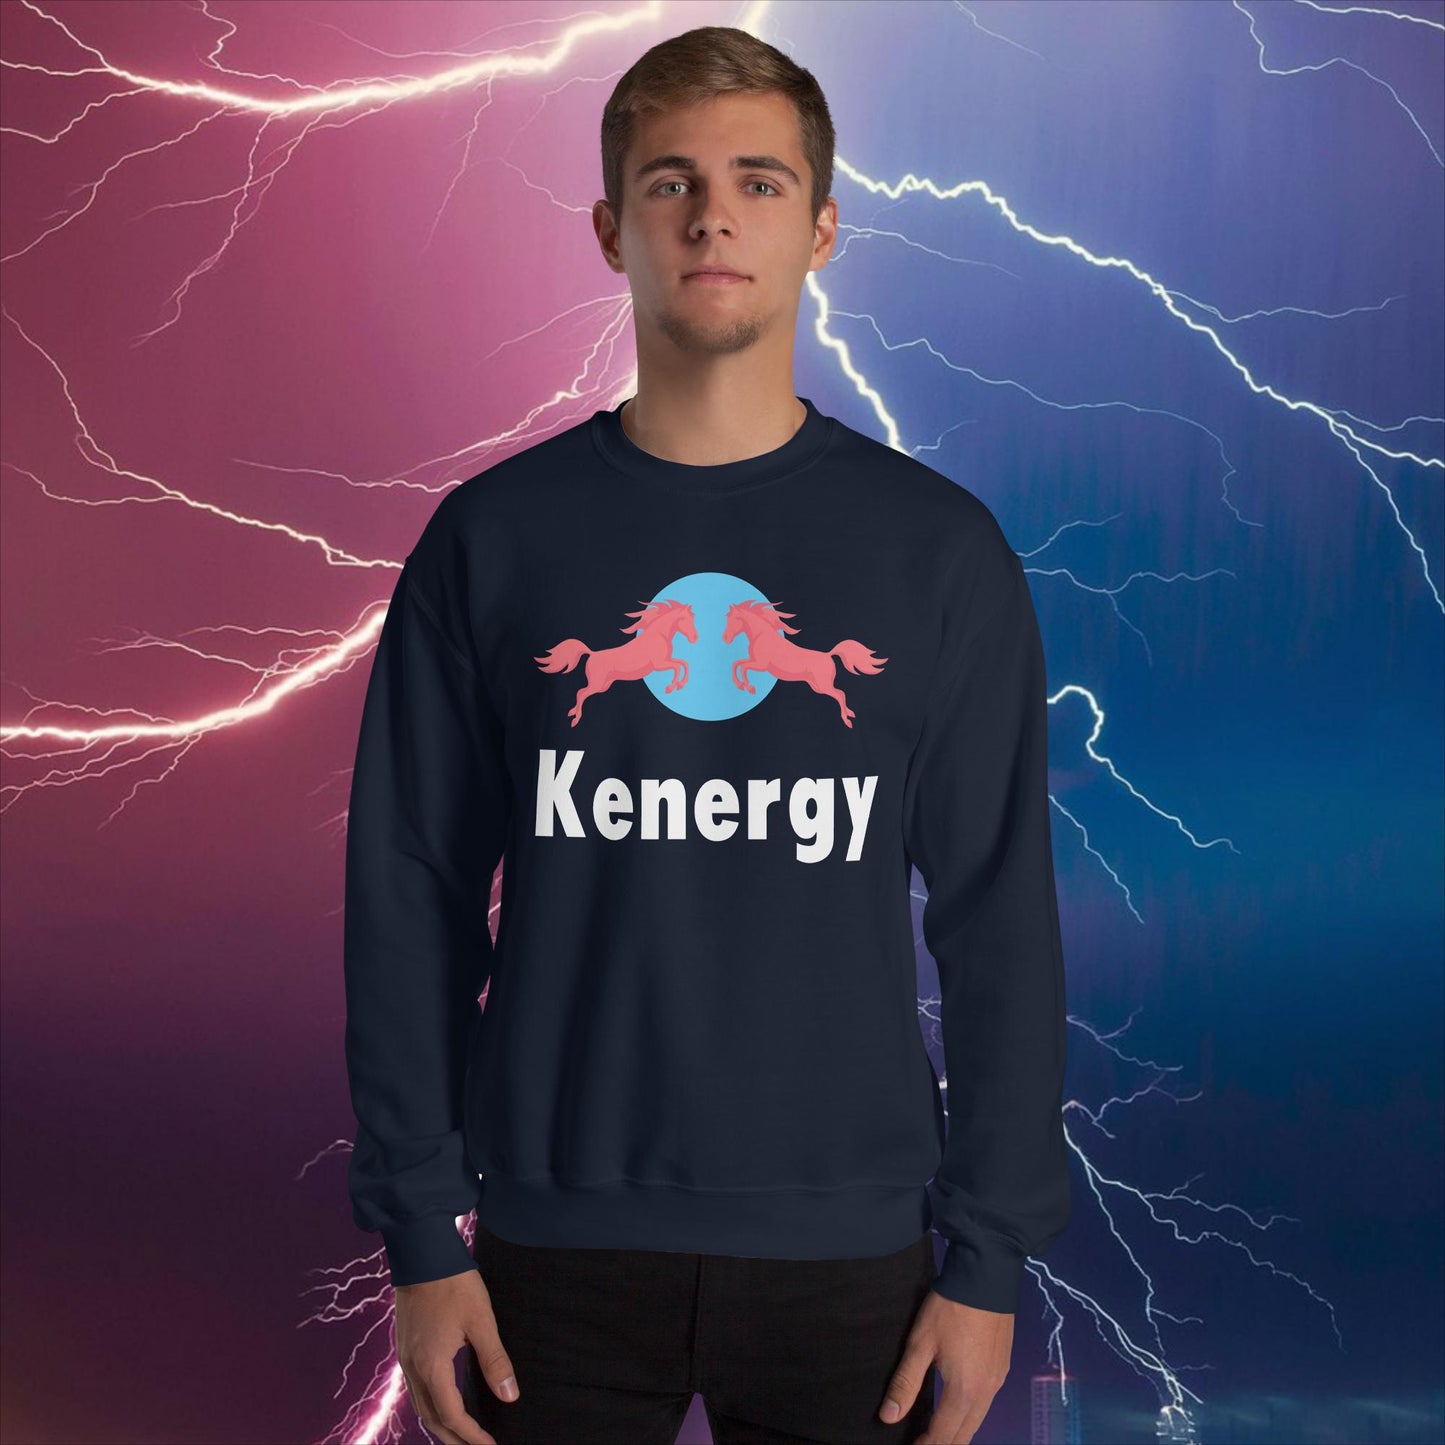 Kenergy Red Bull Ken Barbie Ryan Gosling Kenergy Unisex Sweatshirt Next Cult Brand